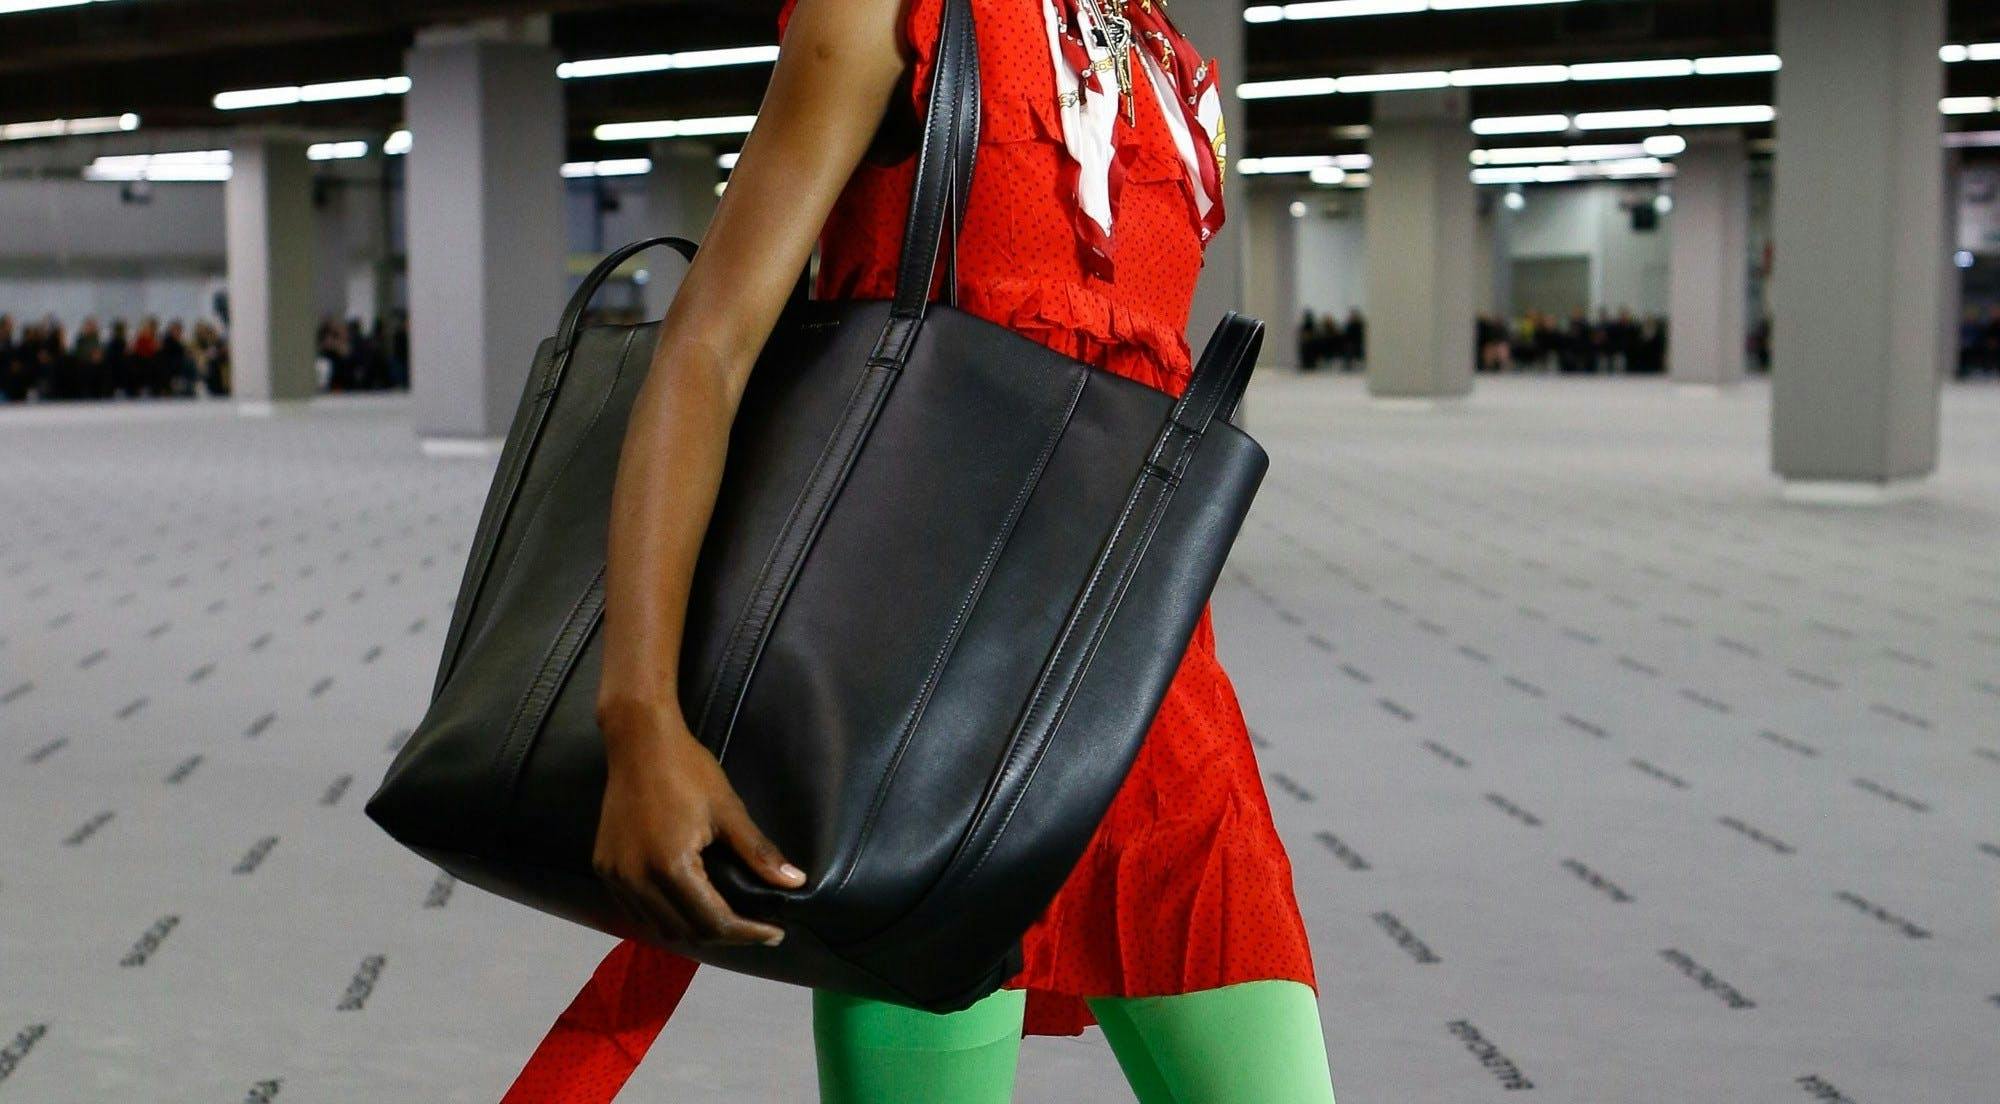 handbag bag accessories accessory human person apparel clothing purse